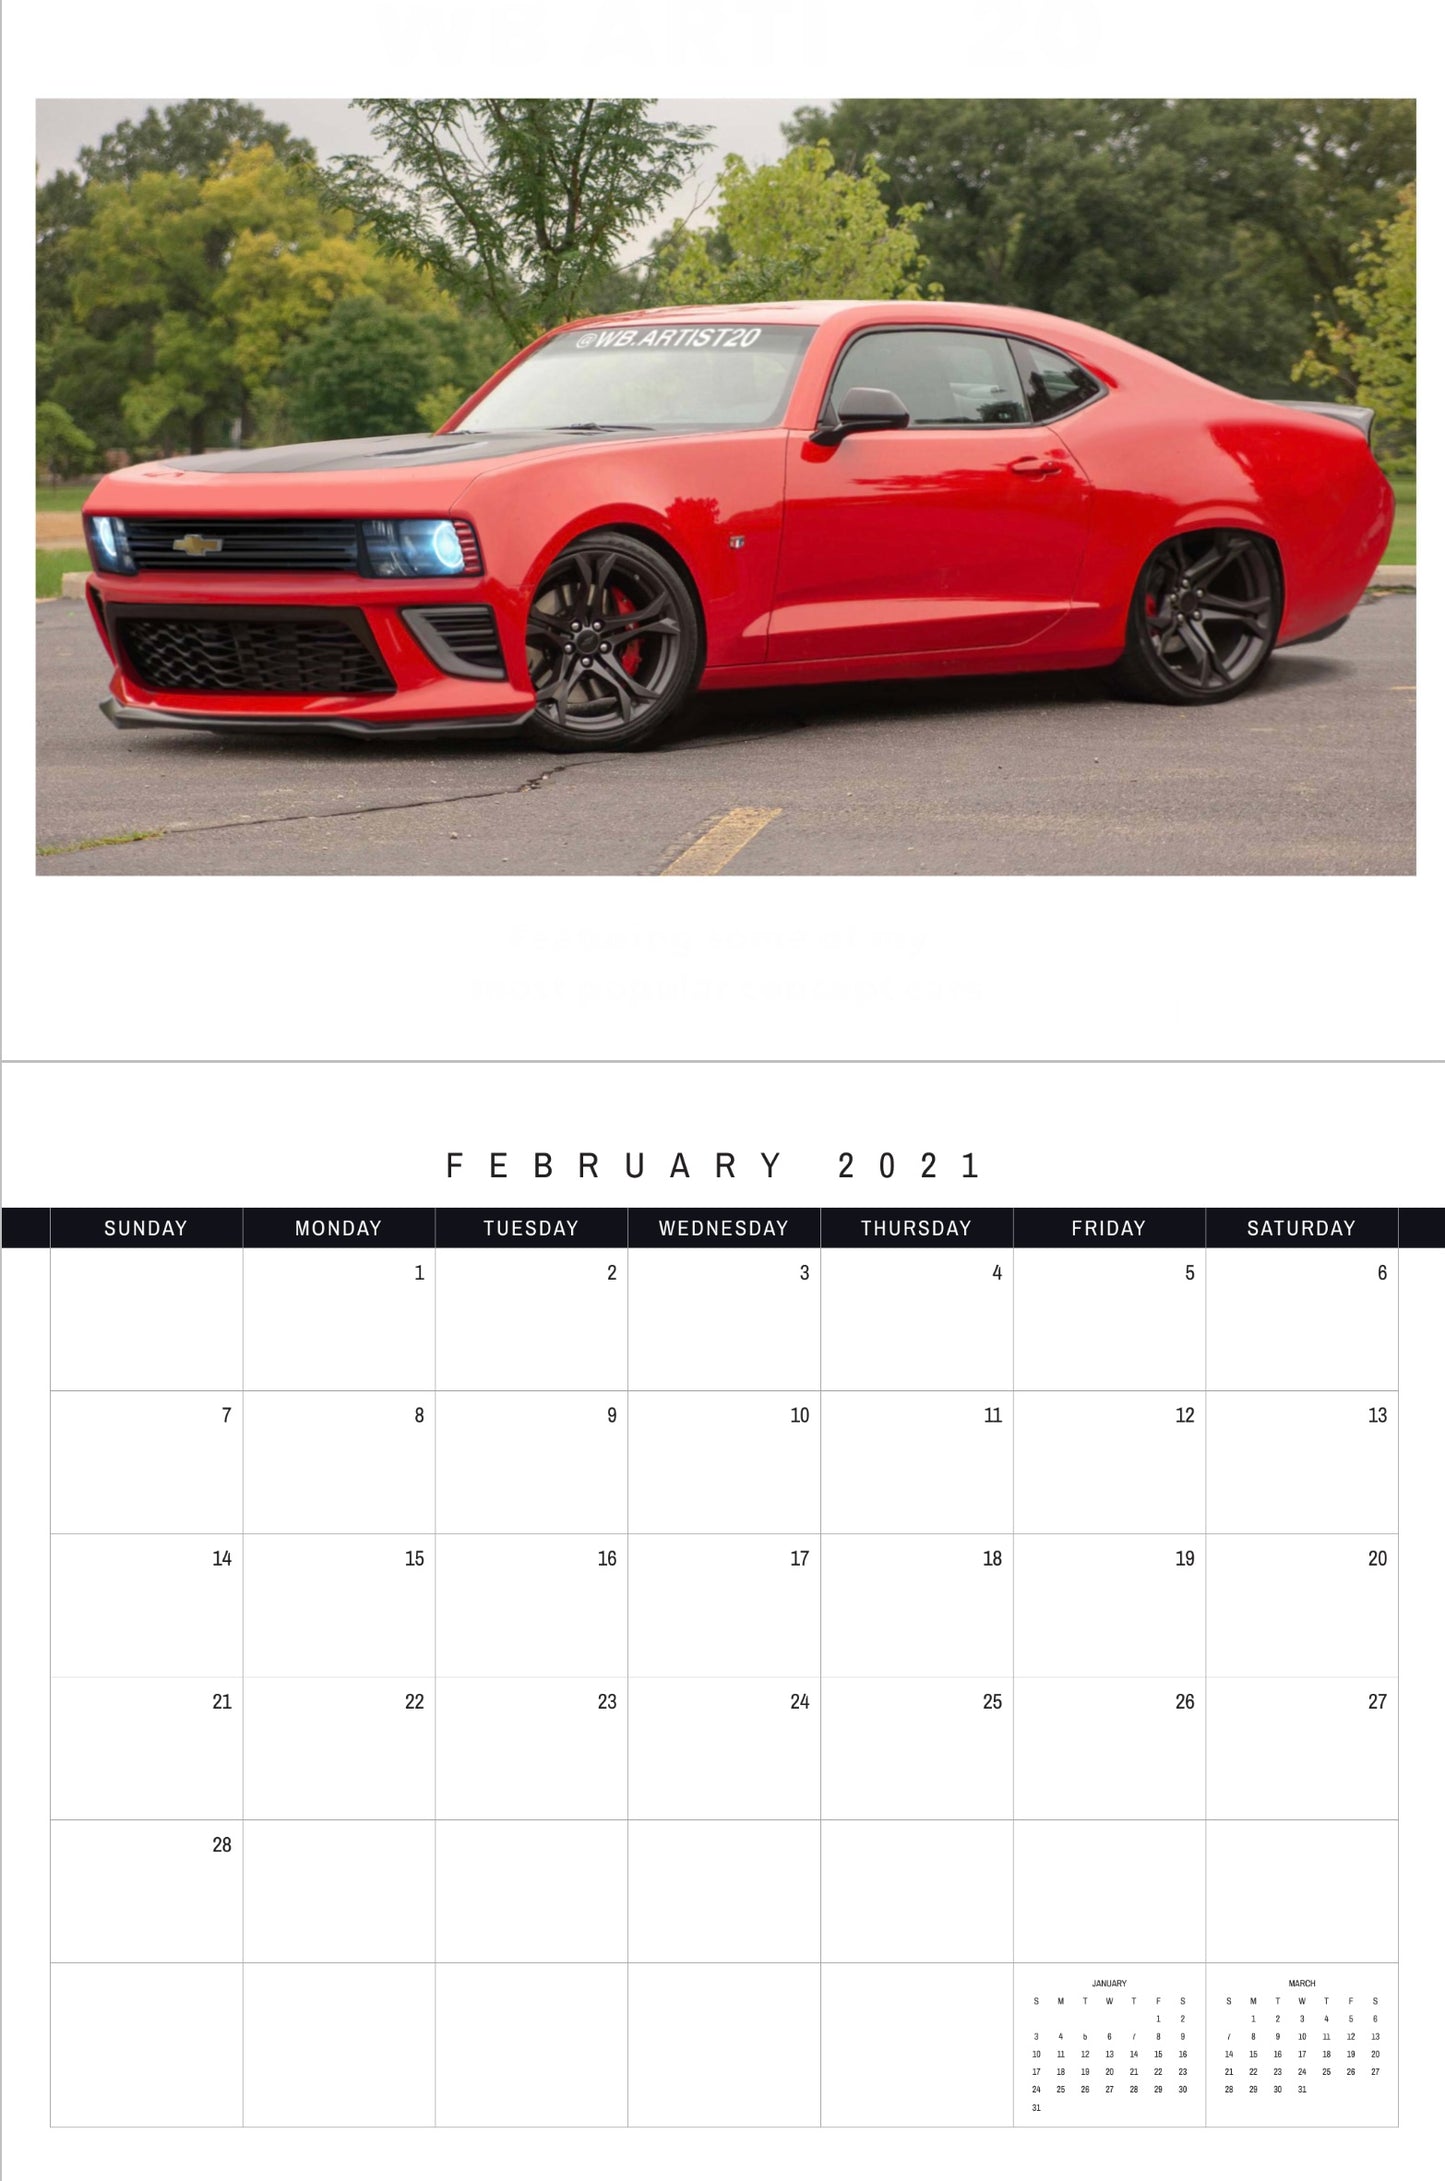 GM 2021 Calendar by WB.Artist20